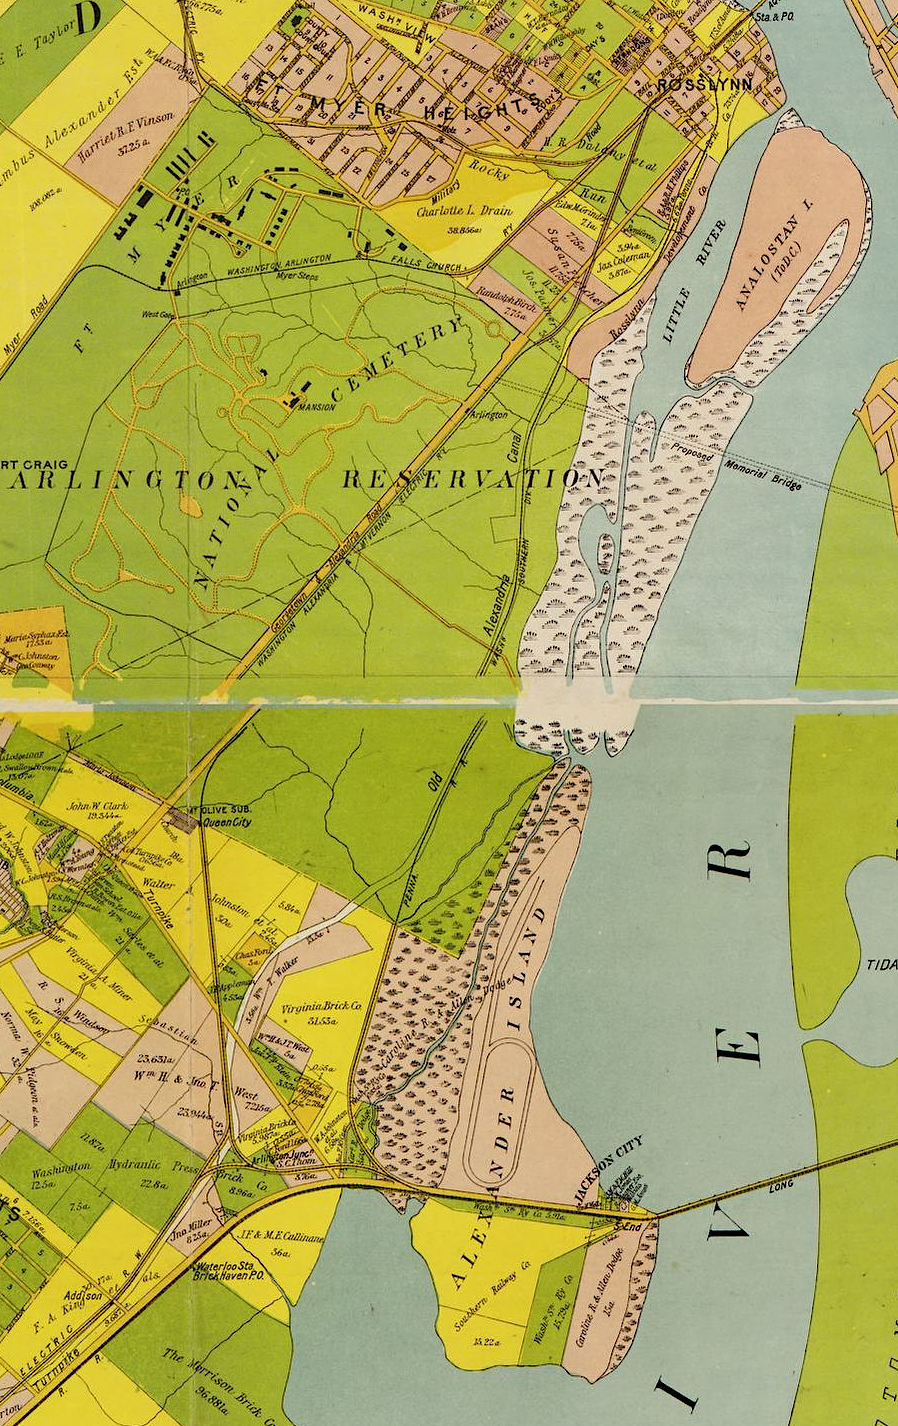 Alexandria (now Arlington) County shoreline in 1900, showing Alexander Island